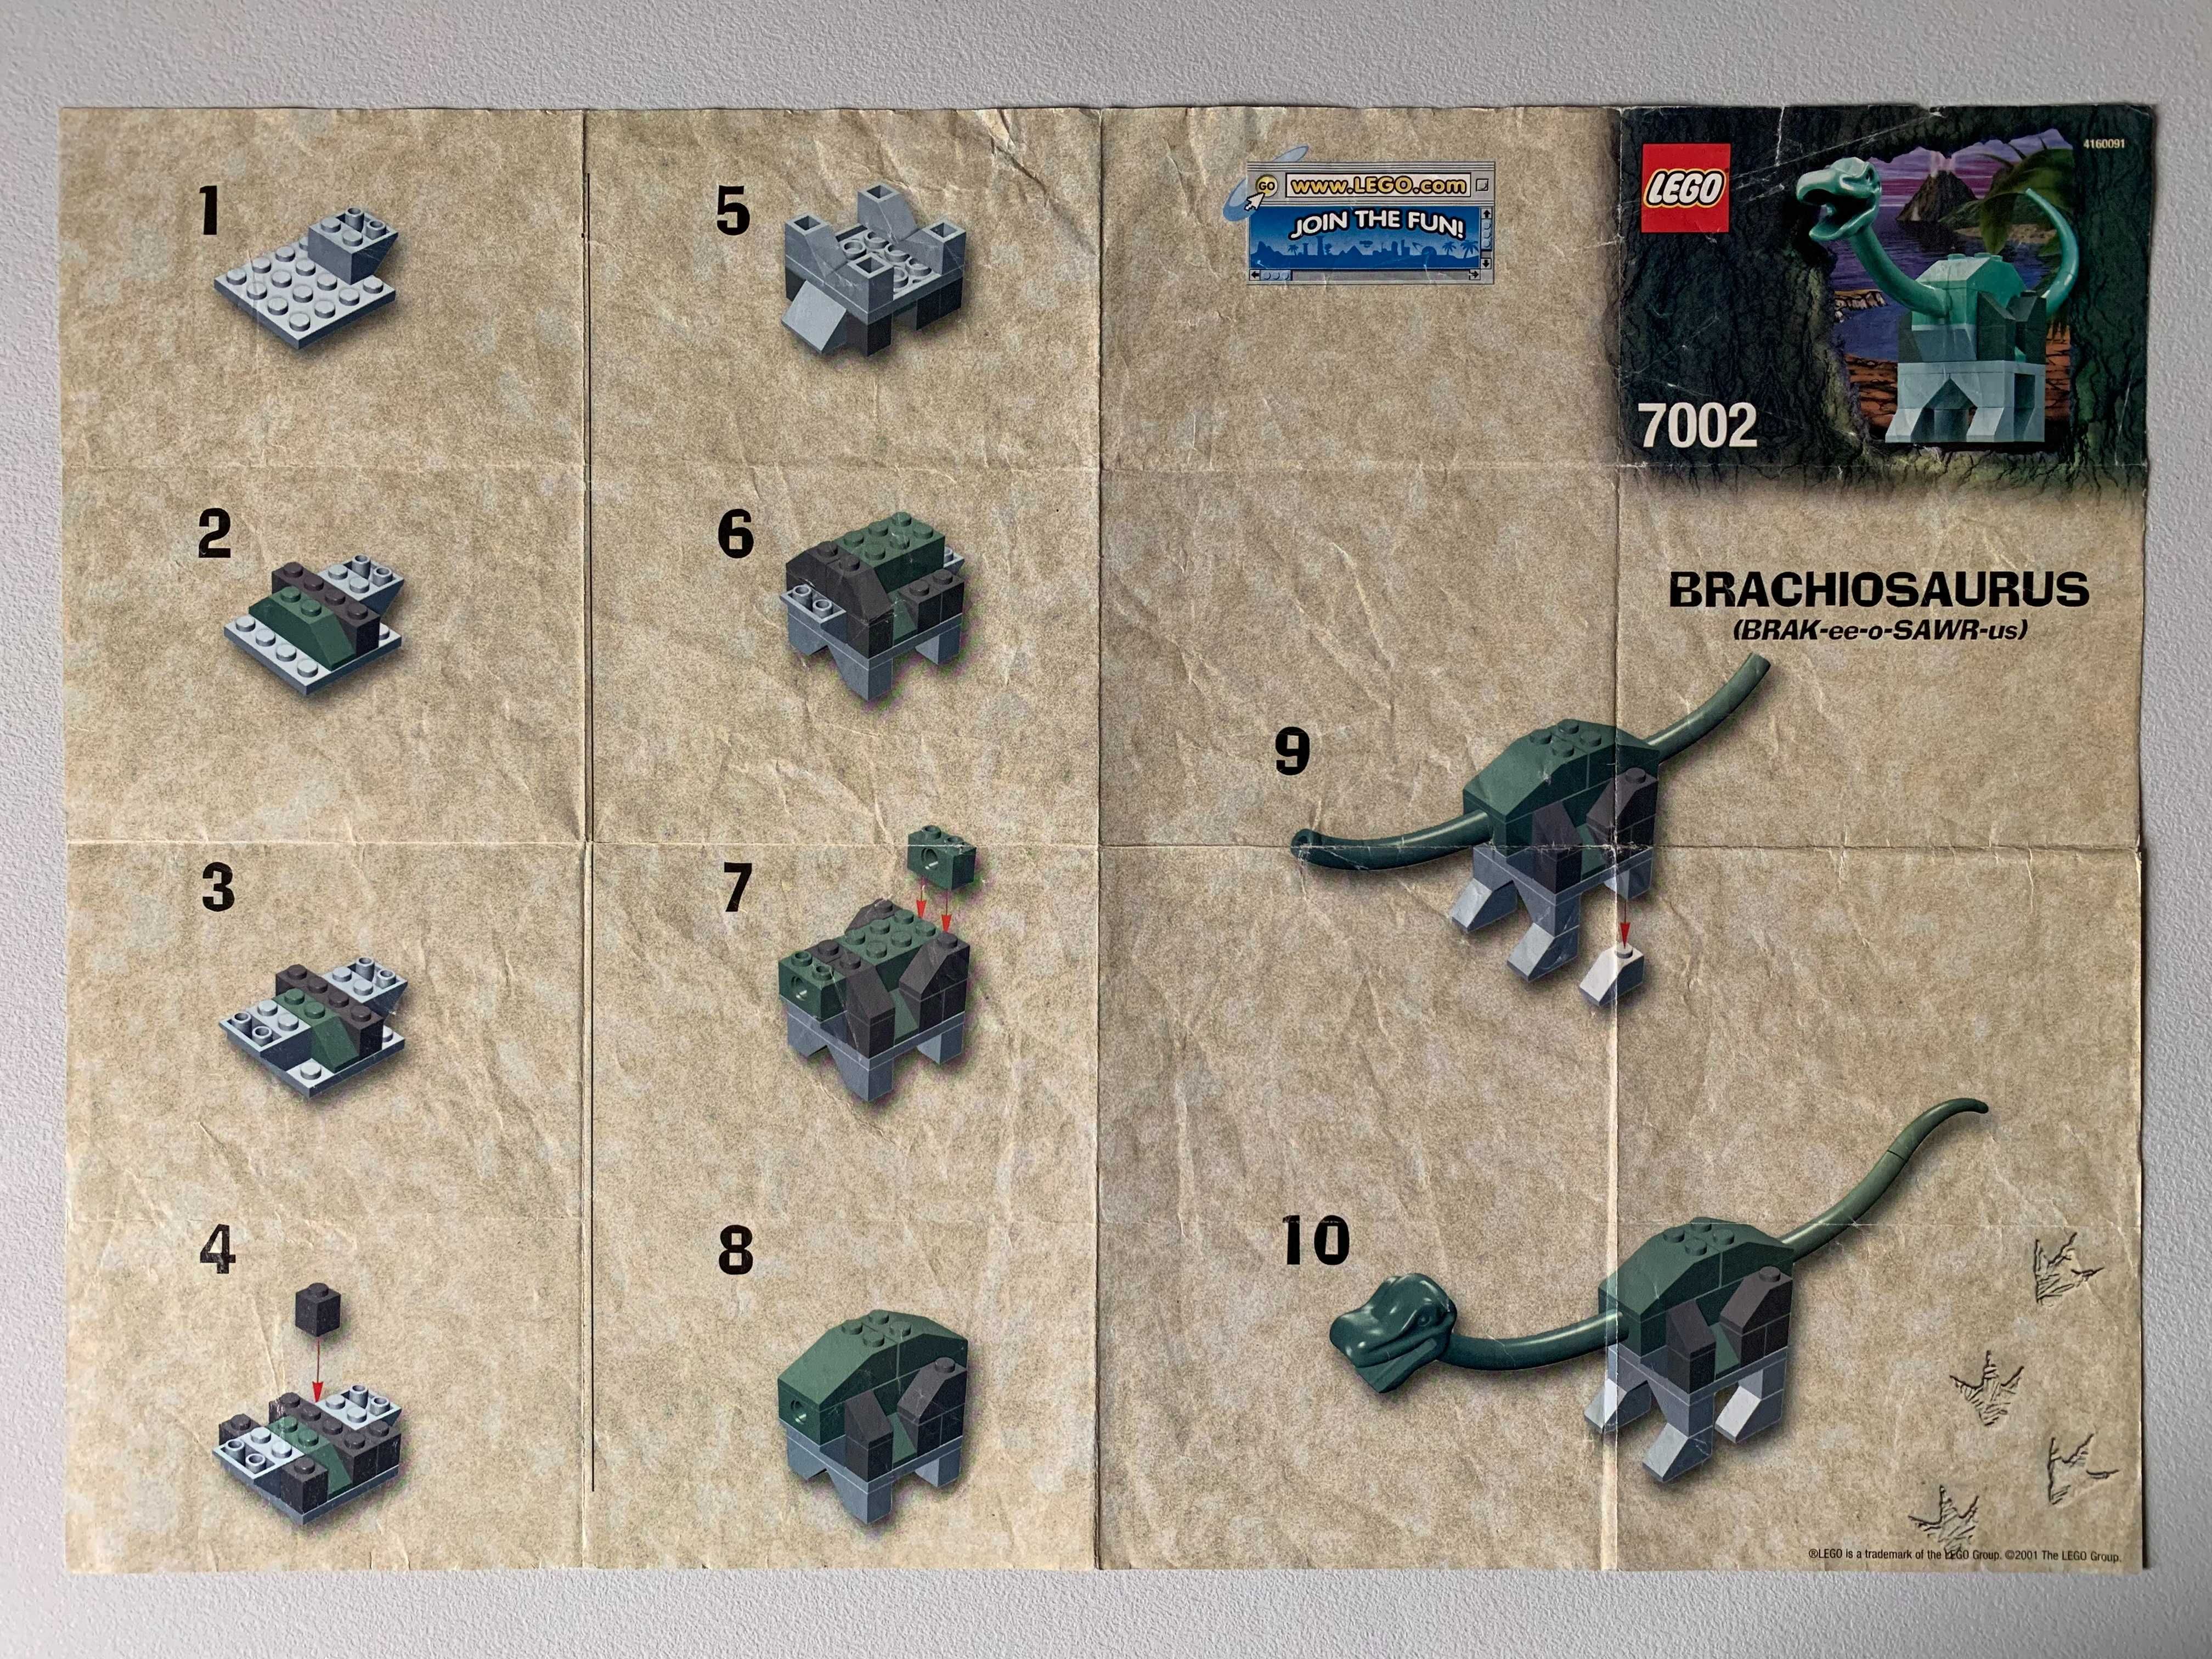 Poster / Manual Lego 7002 - Brachiosaurus